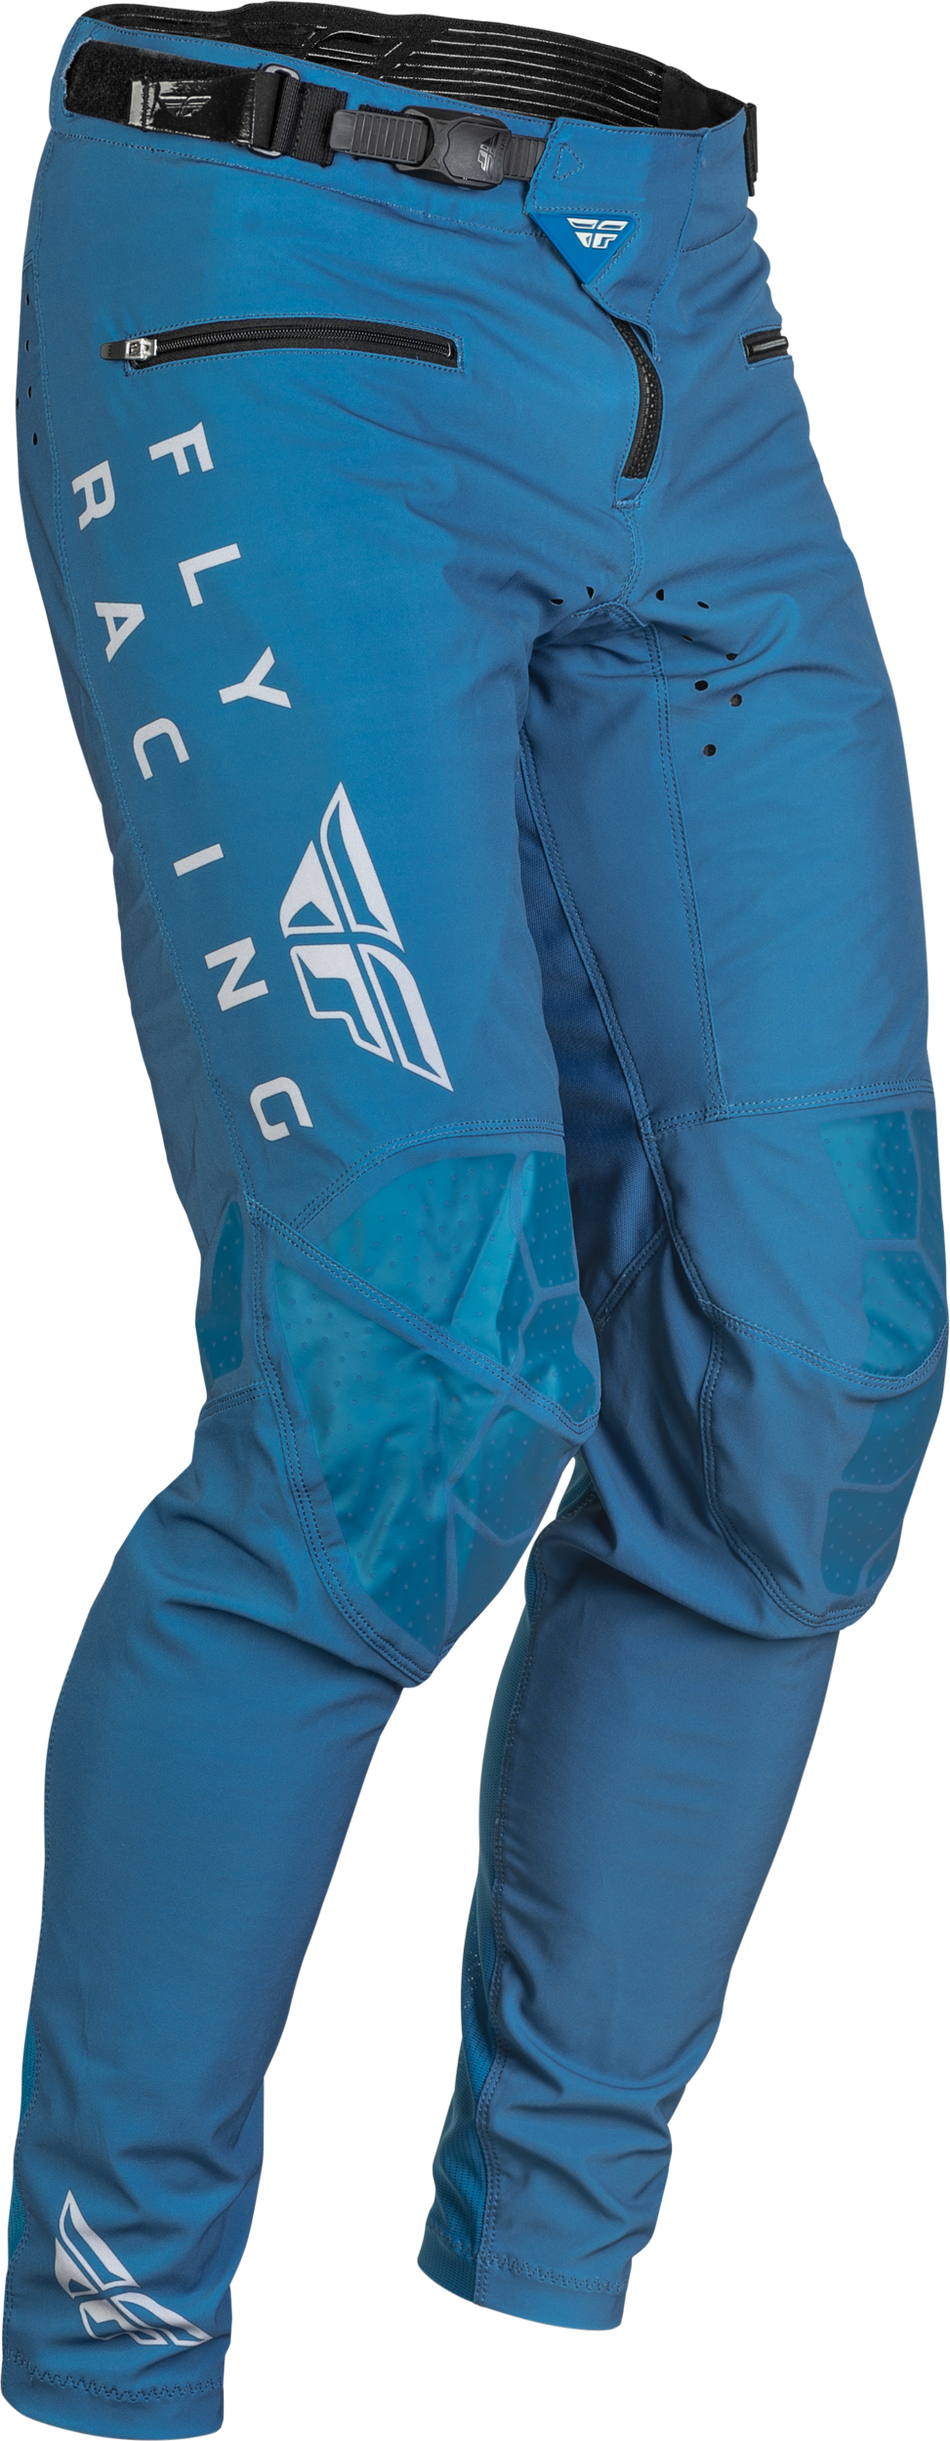 FLY RACING Youth Radium Bicycle Pants Slate Blue/Grey Sz 18 376-04418